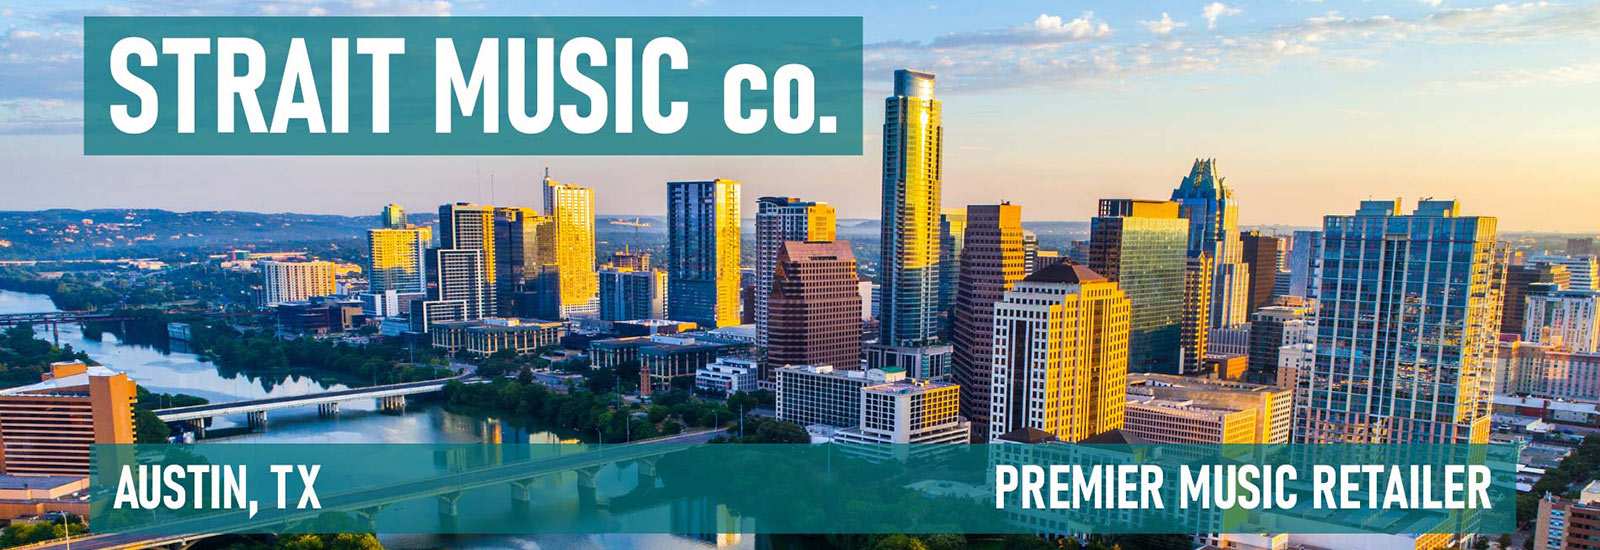 Strait Music Company Austin TX Premier Music Retailer